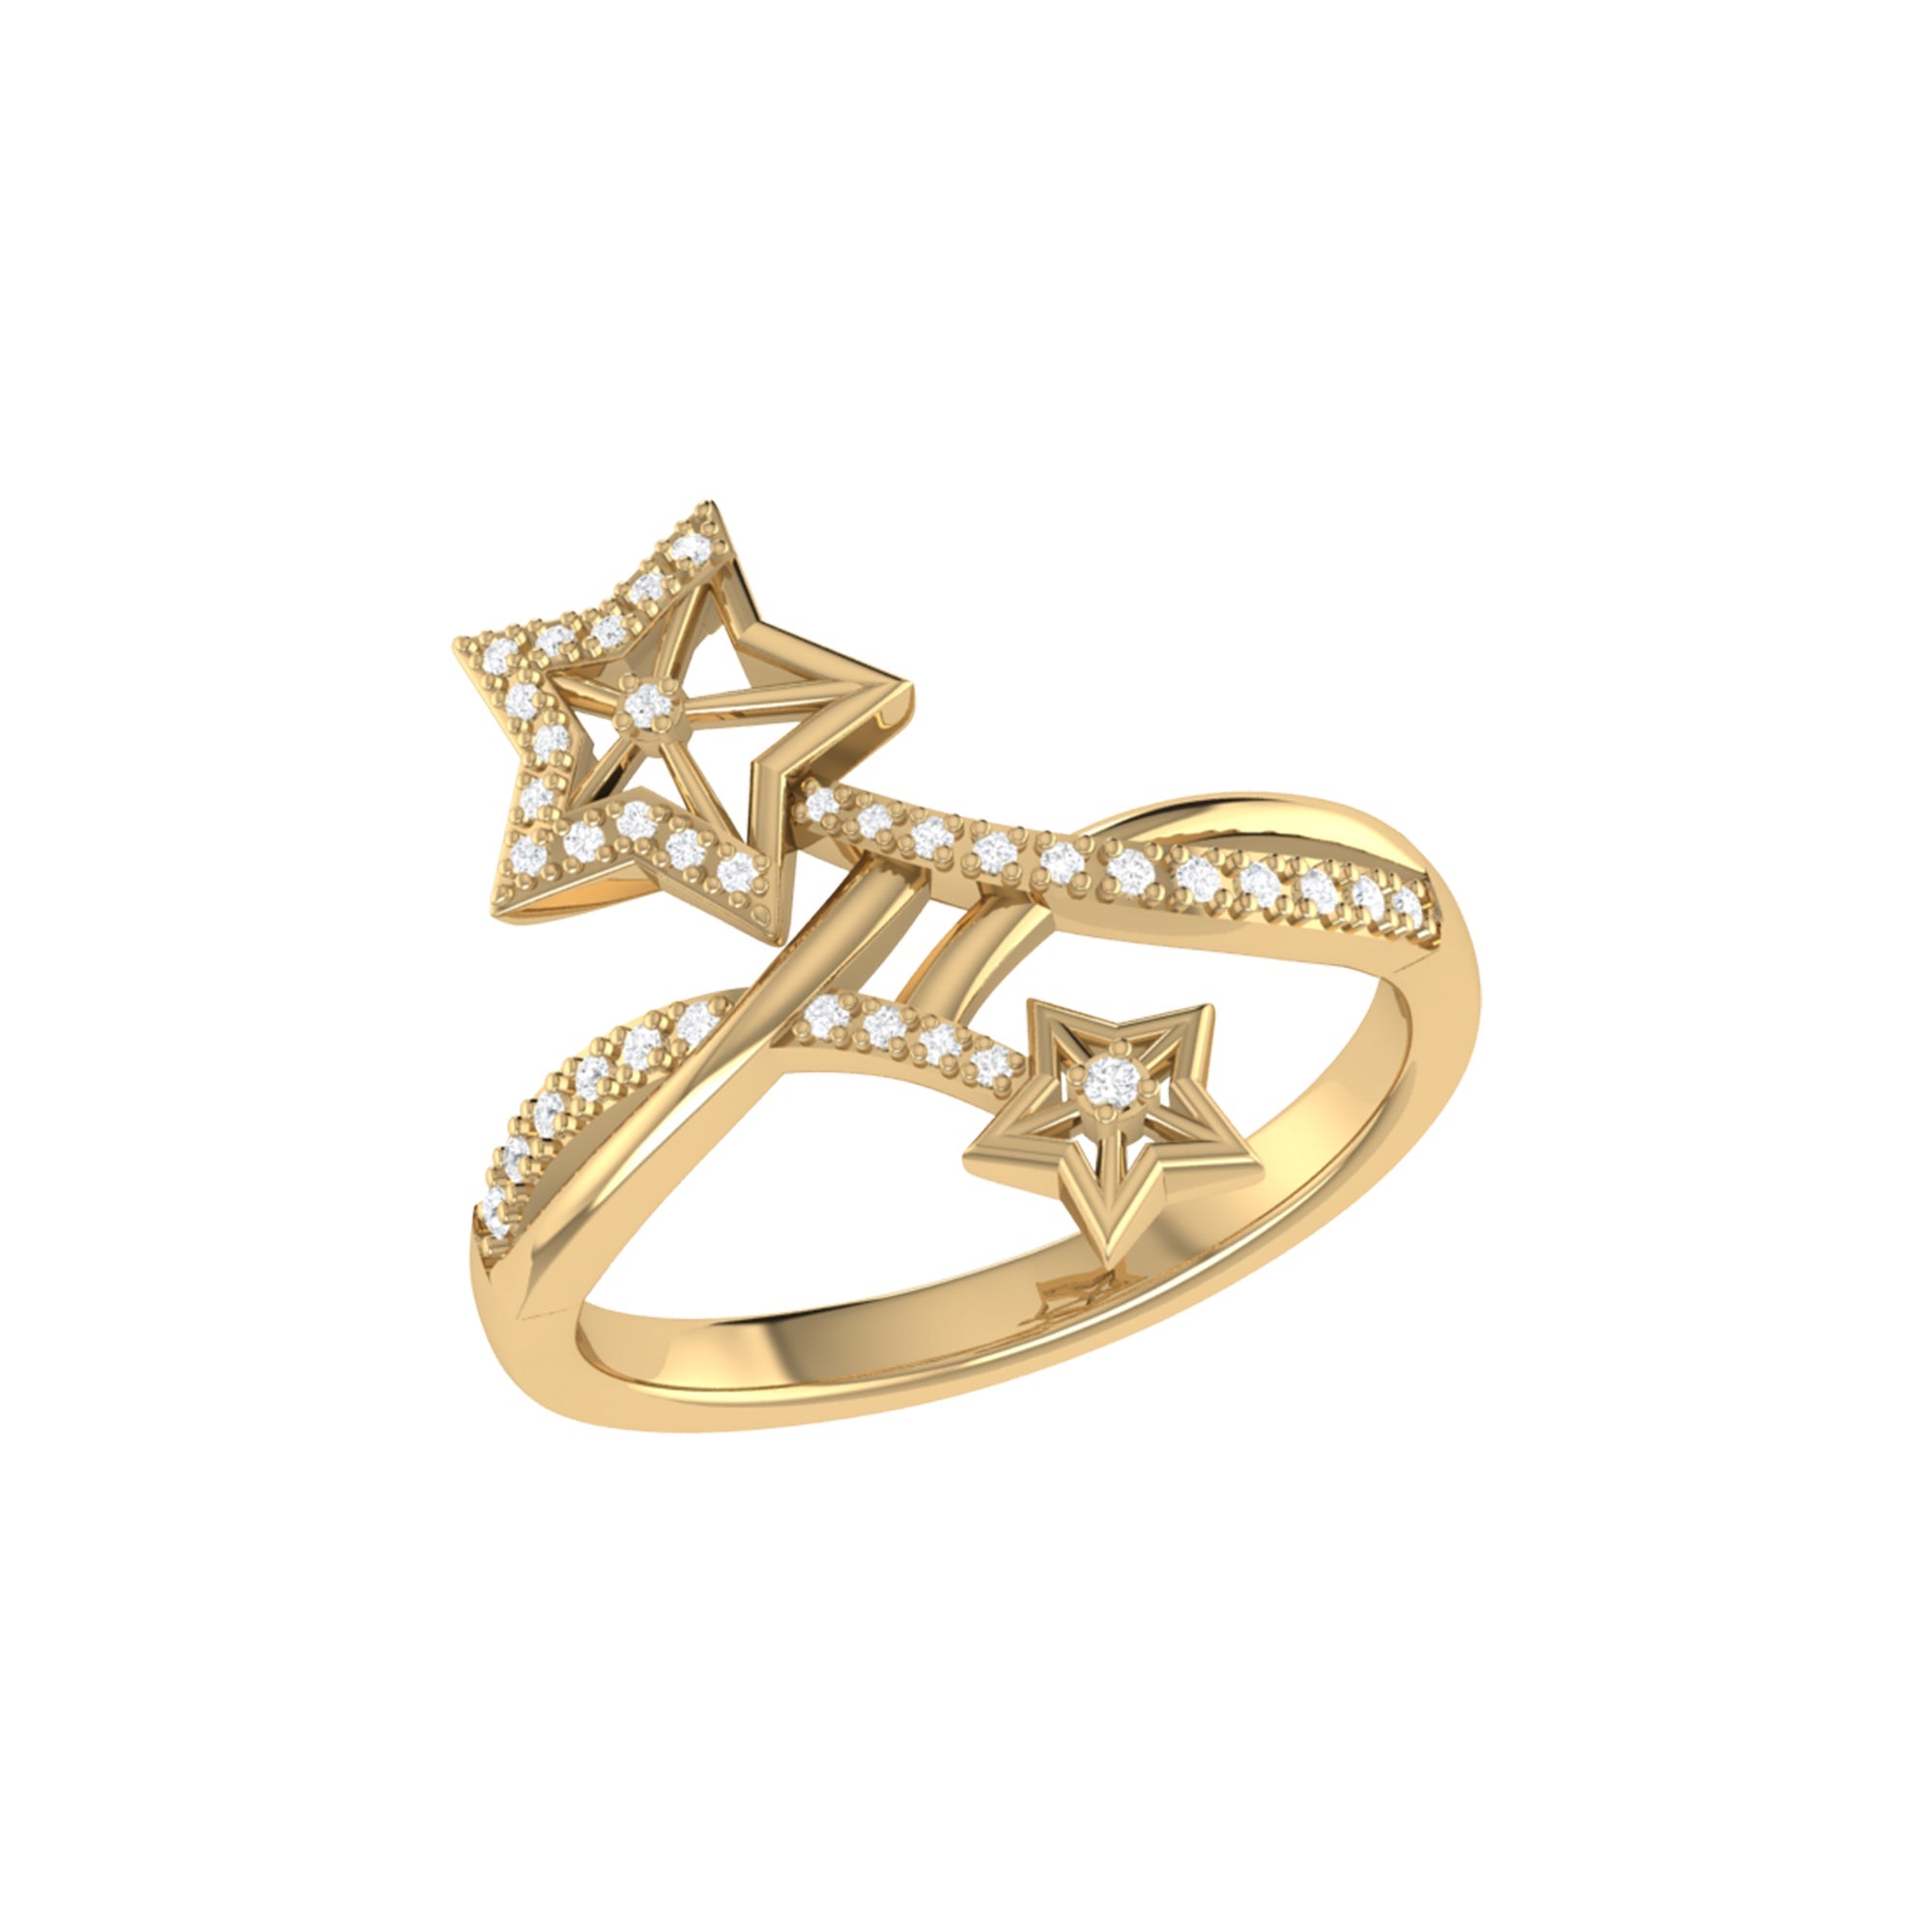 Stars Entwined Diamond Ring in 14K Gold Vermeil: Genuine Diamonds, Handmade to Order - Jewelry & Watches - Bijou Her -  -  - 